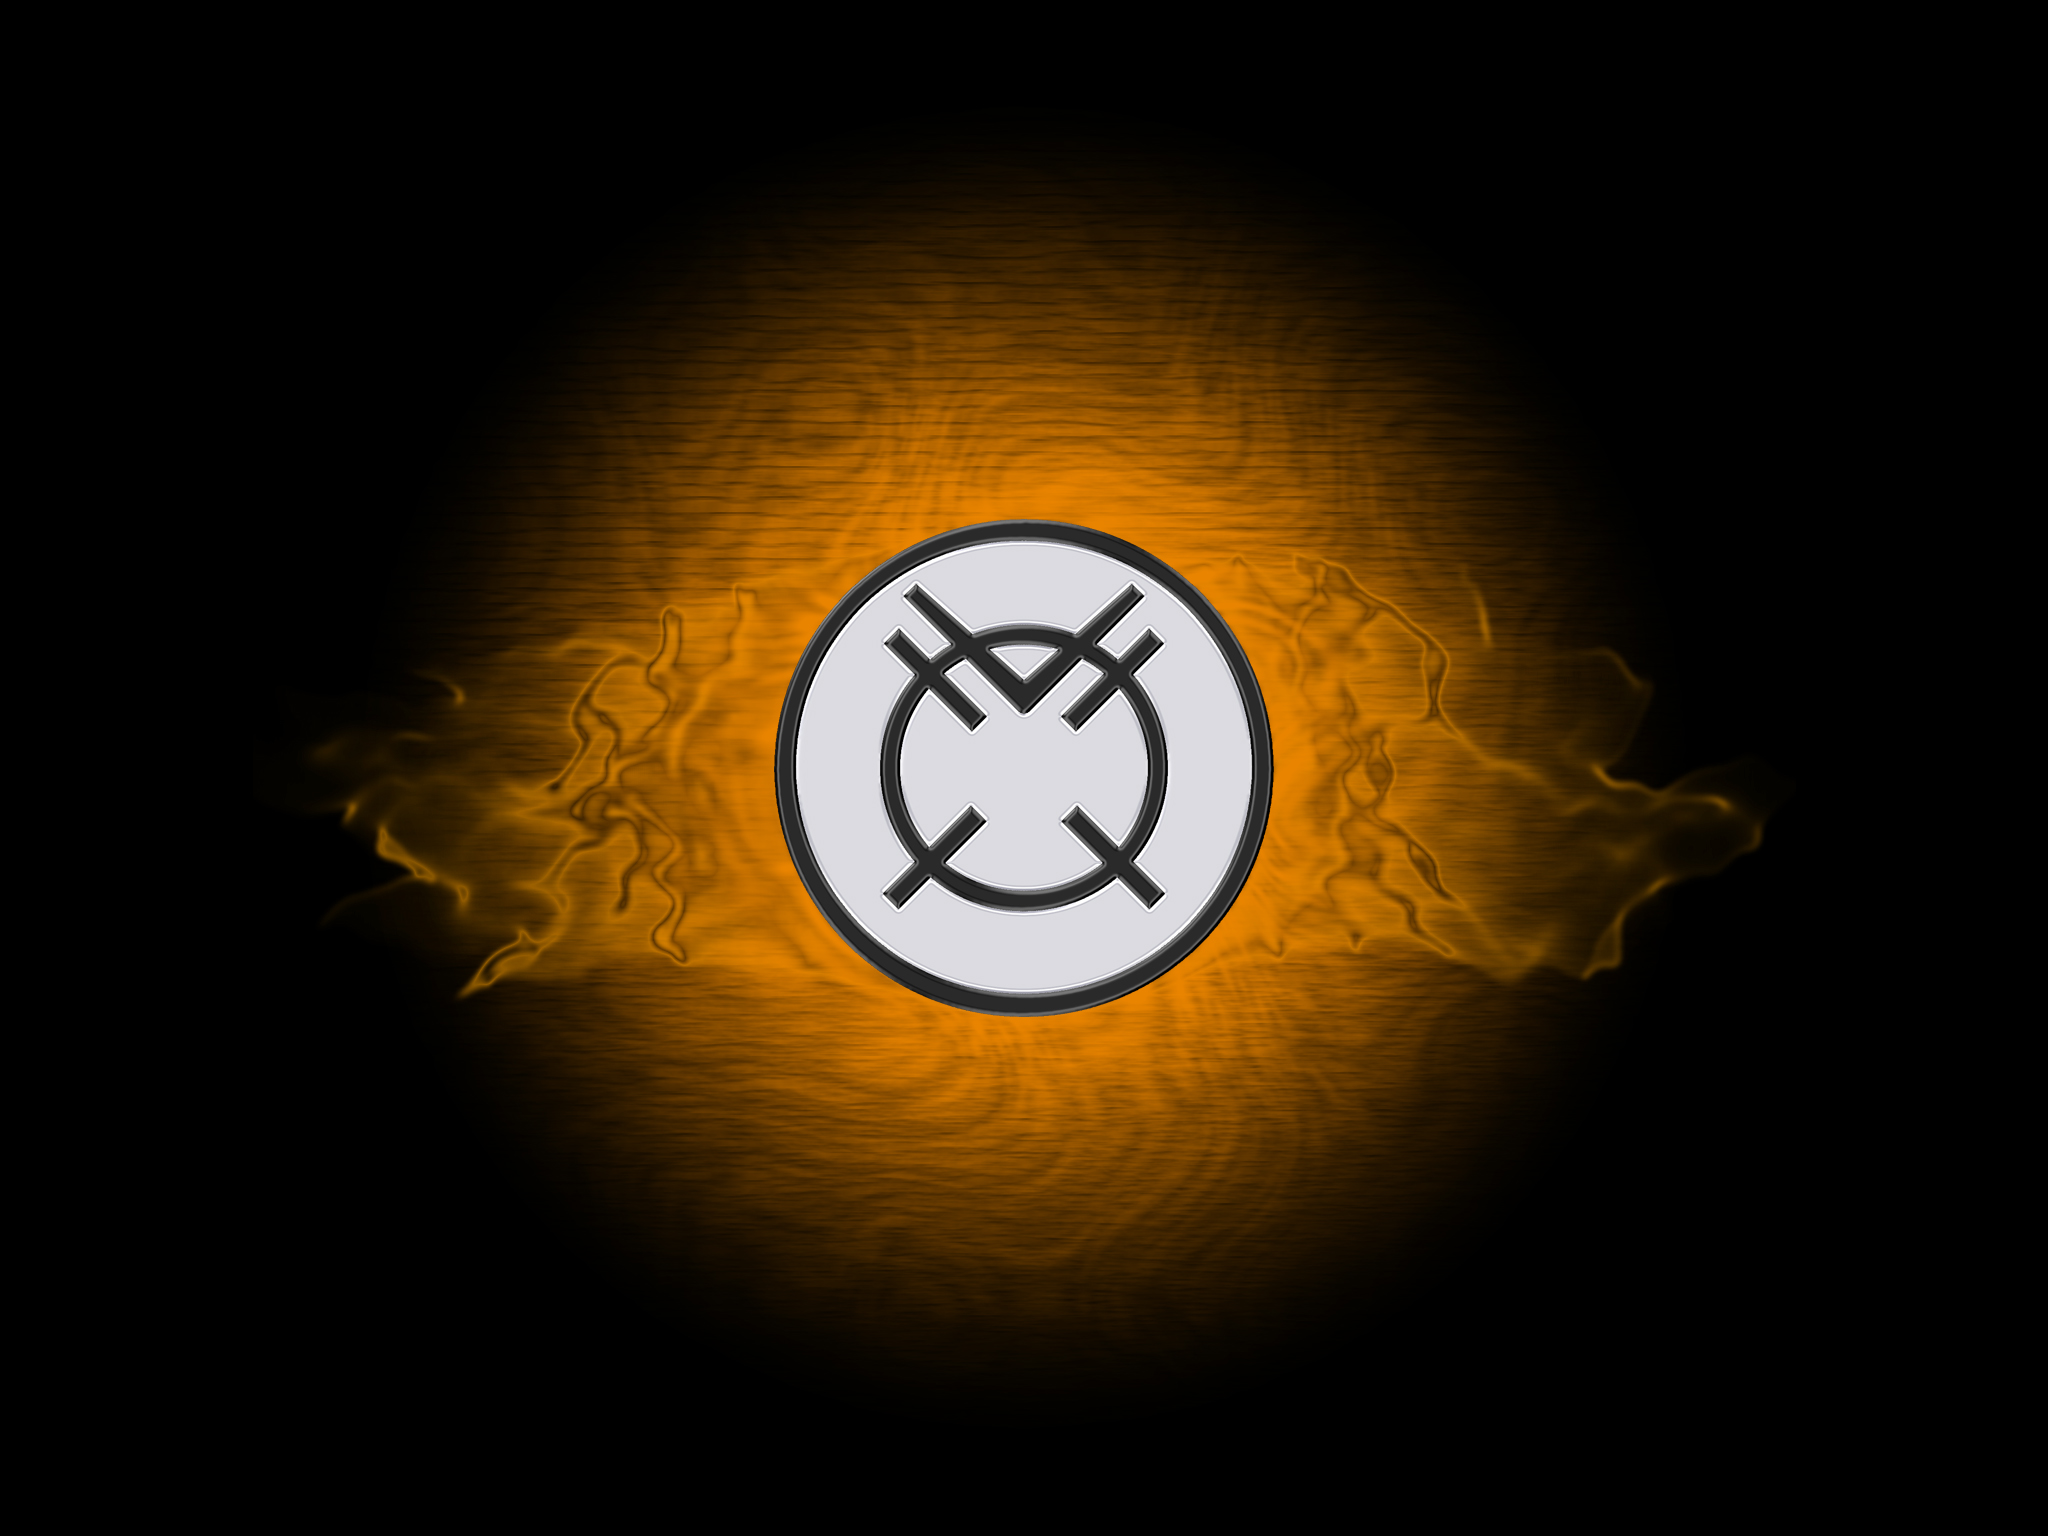 Orange Lantern Corps HD Wallpaper Background Image